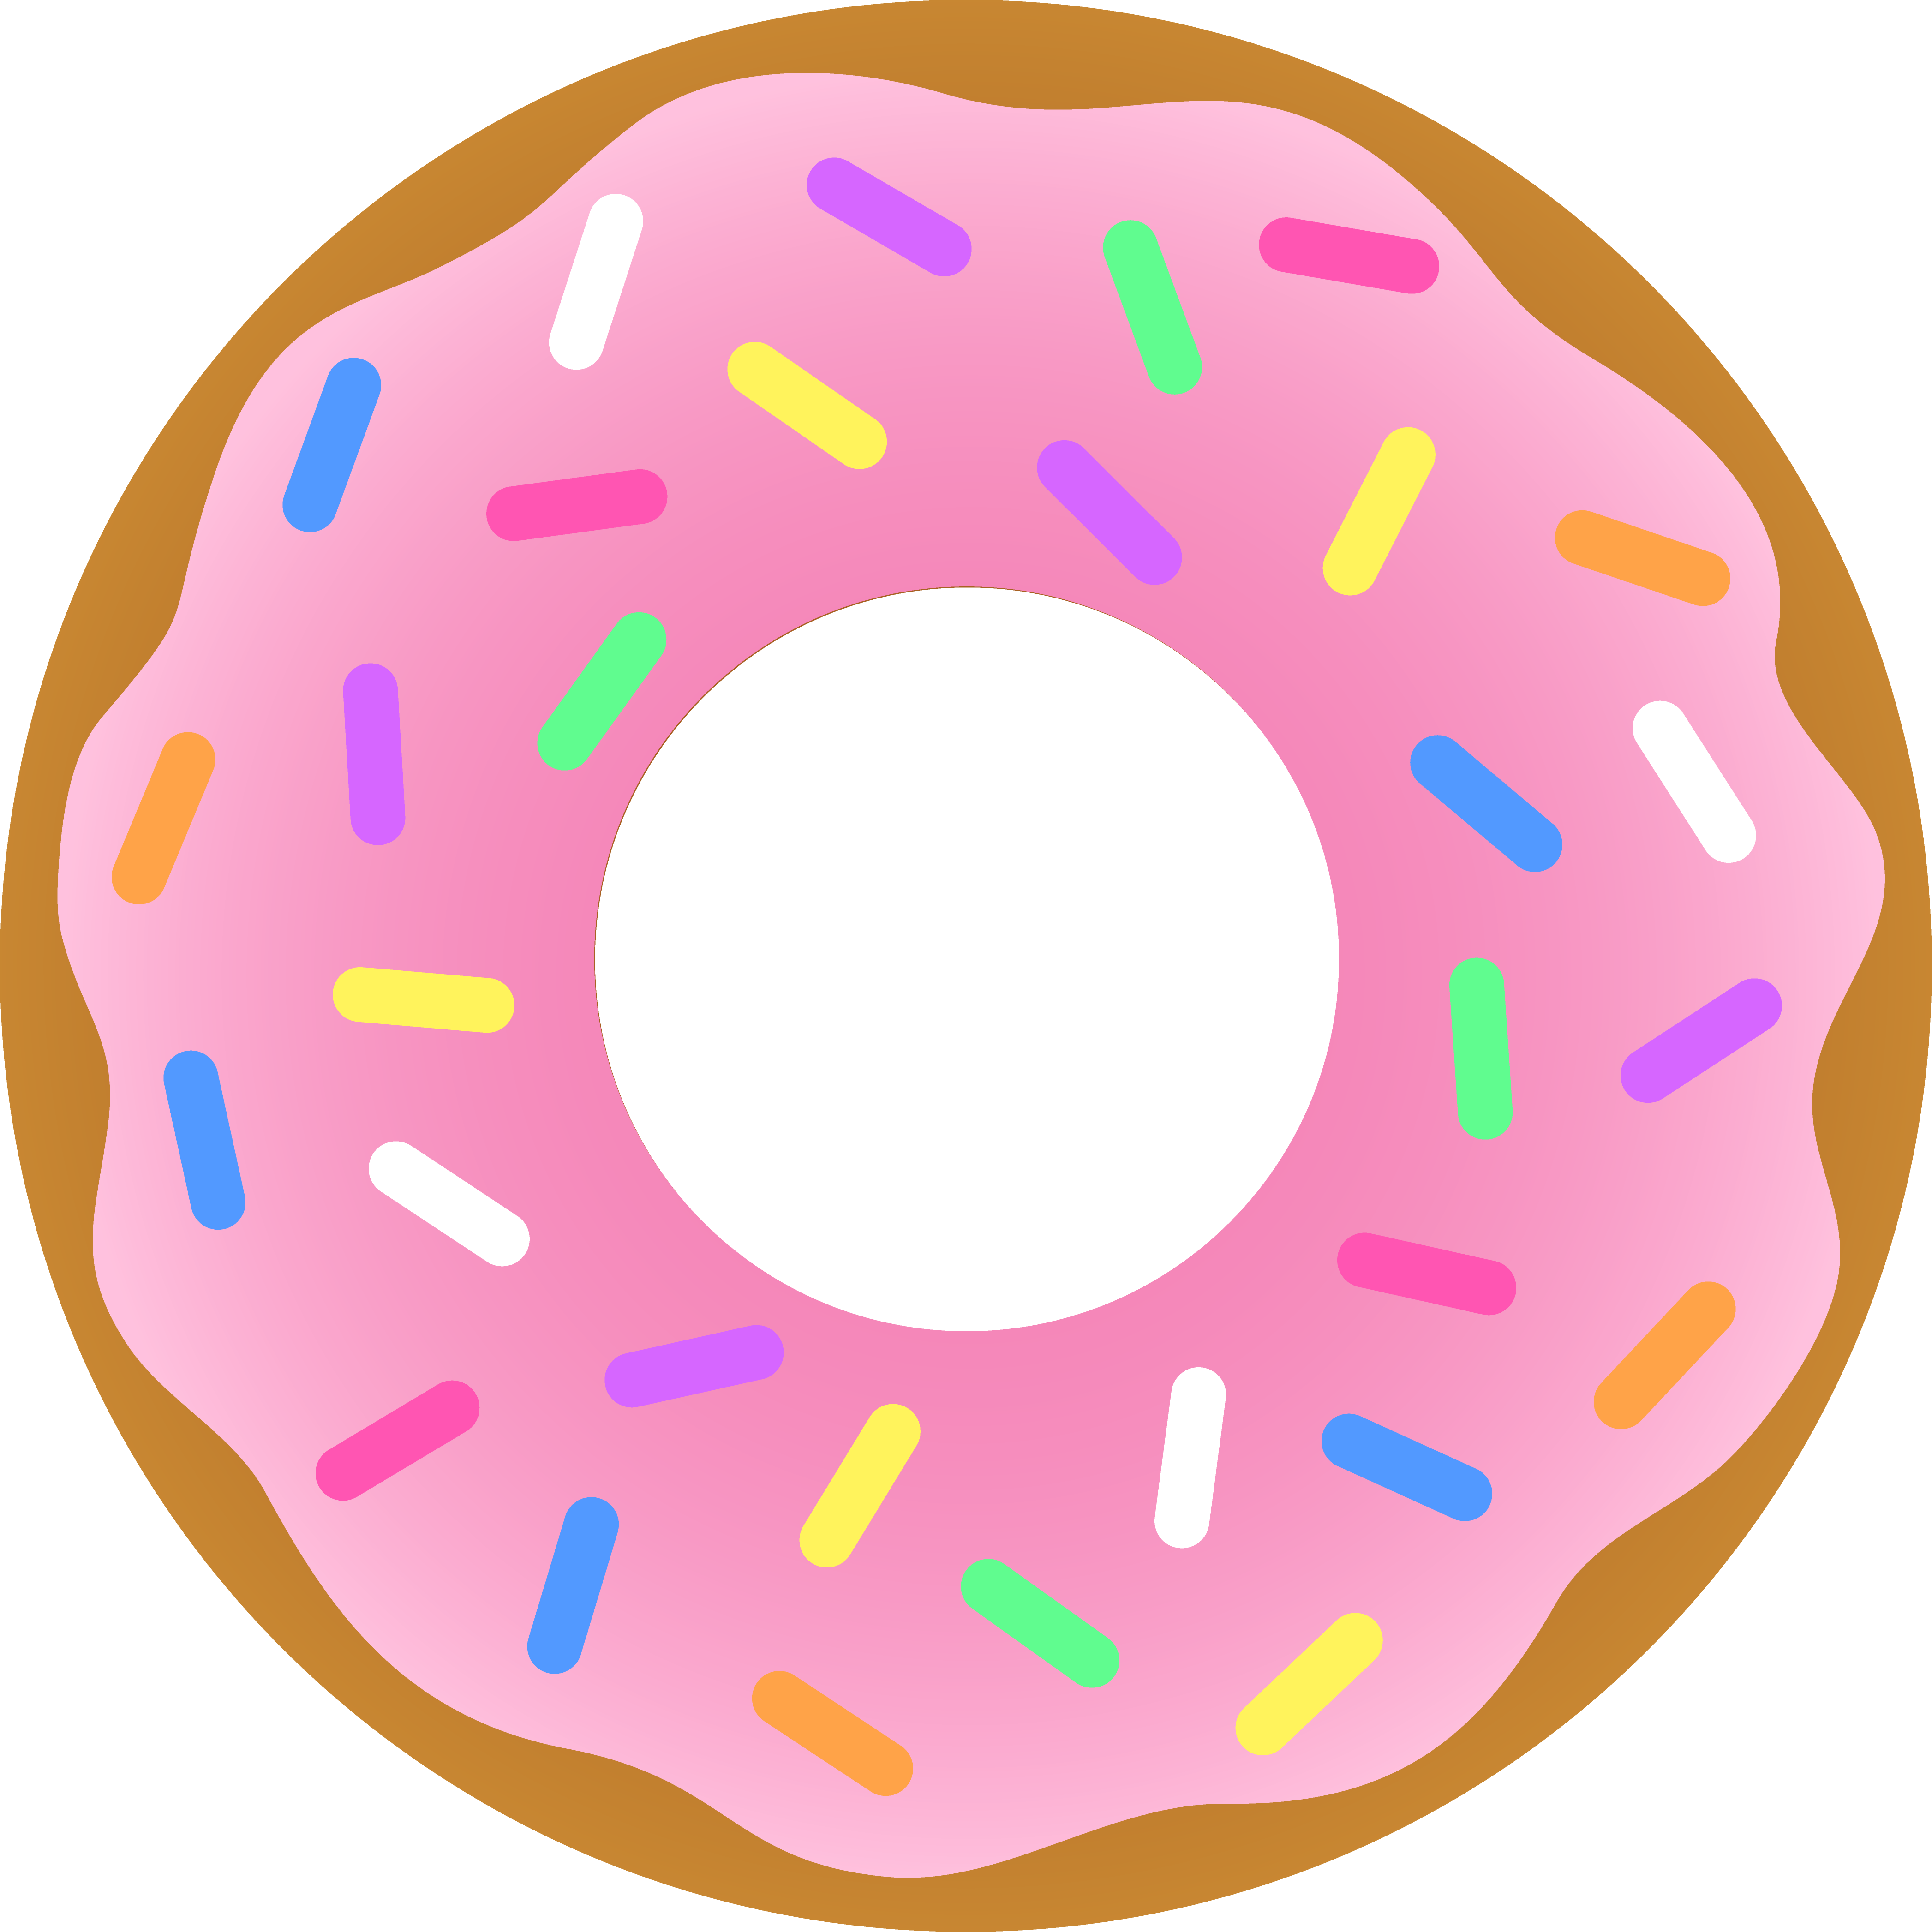 Donut PNG images Download